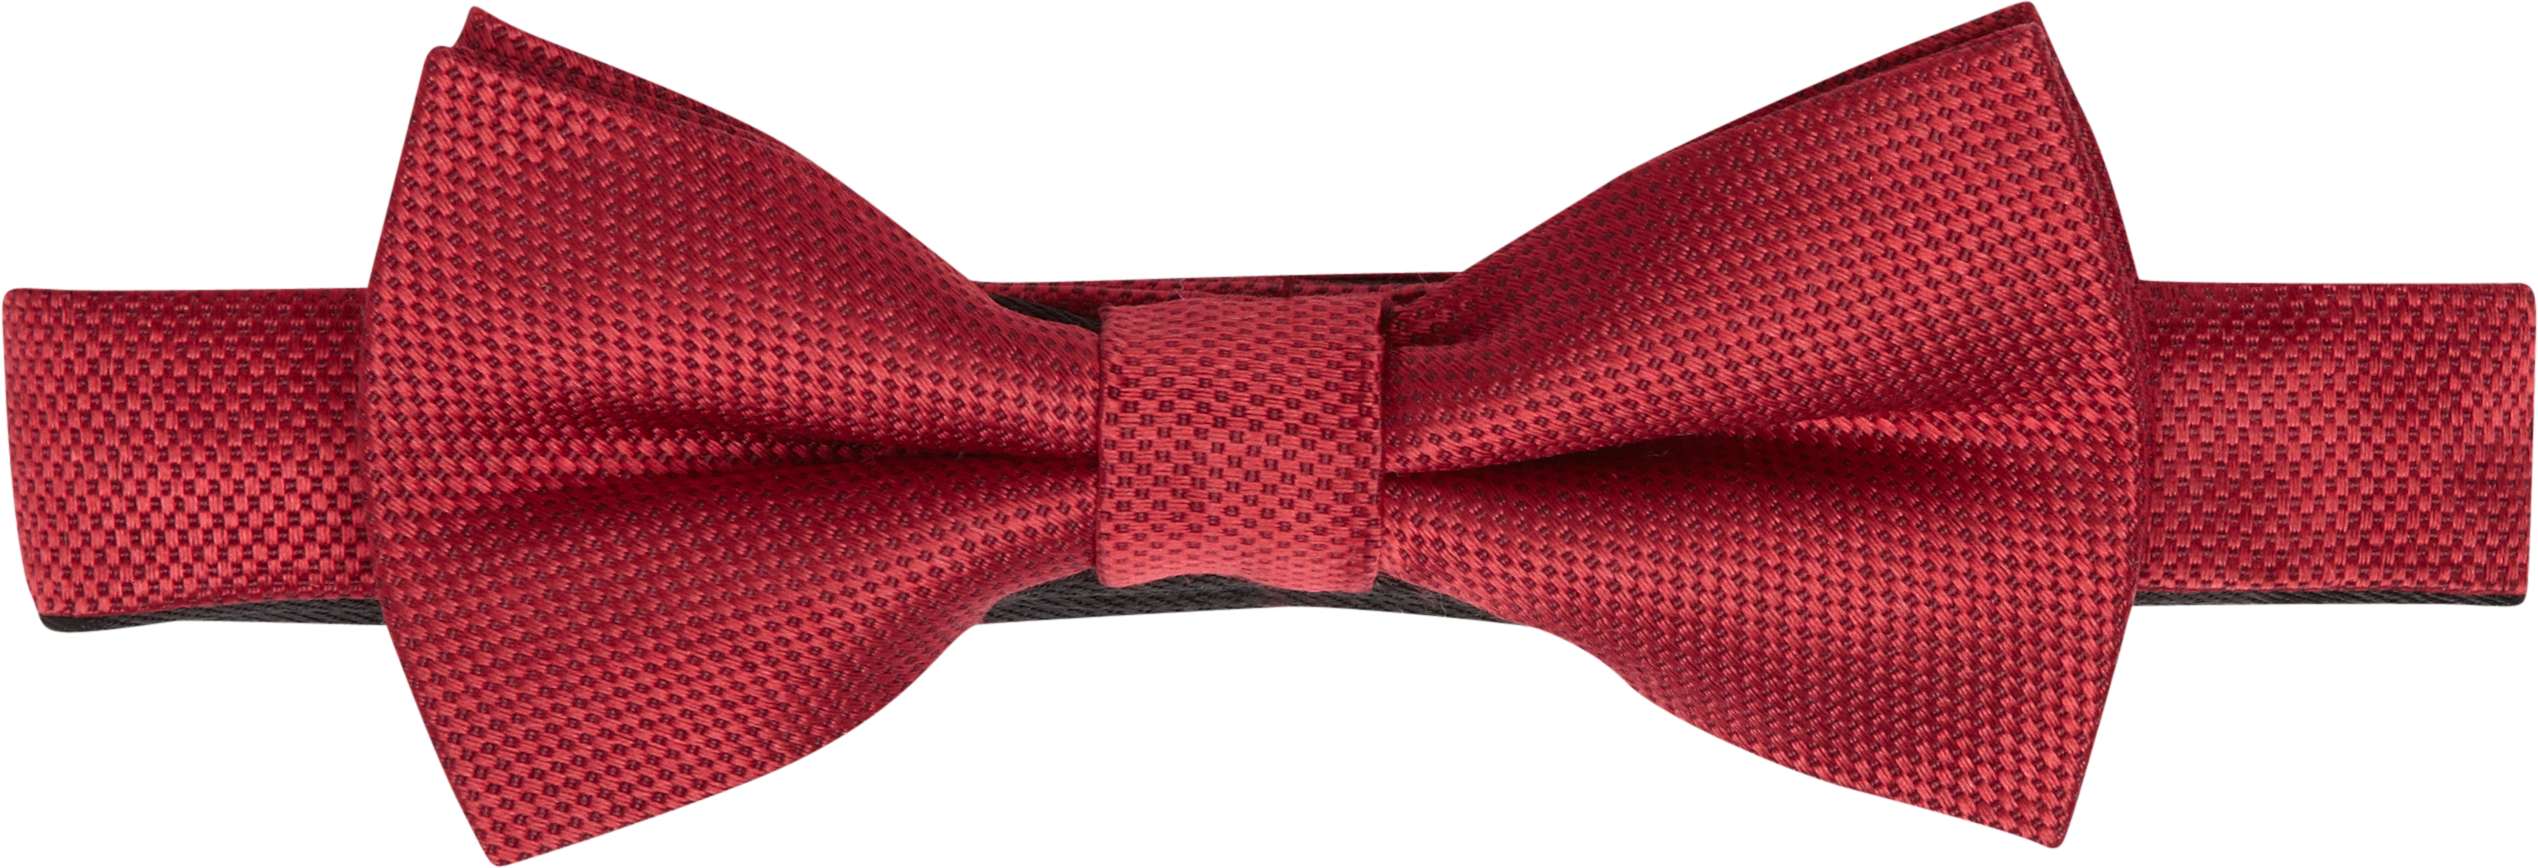 Esquire Red Satin Pre-Tied Bow Tie - Men's Bow Ties | Men's Wearhouse